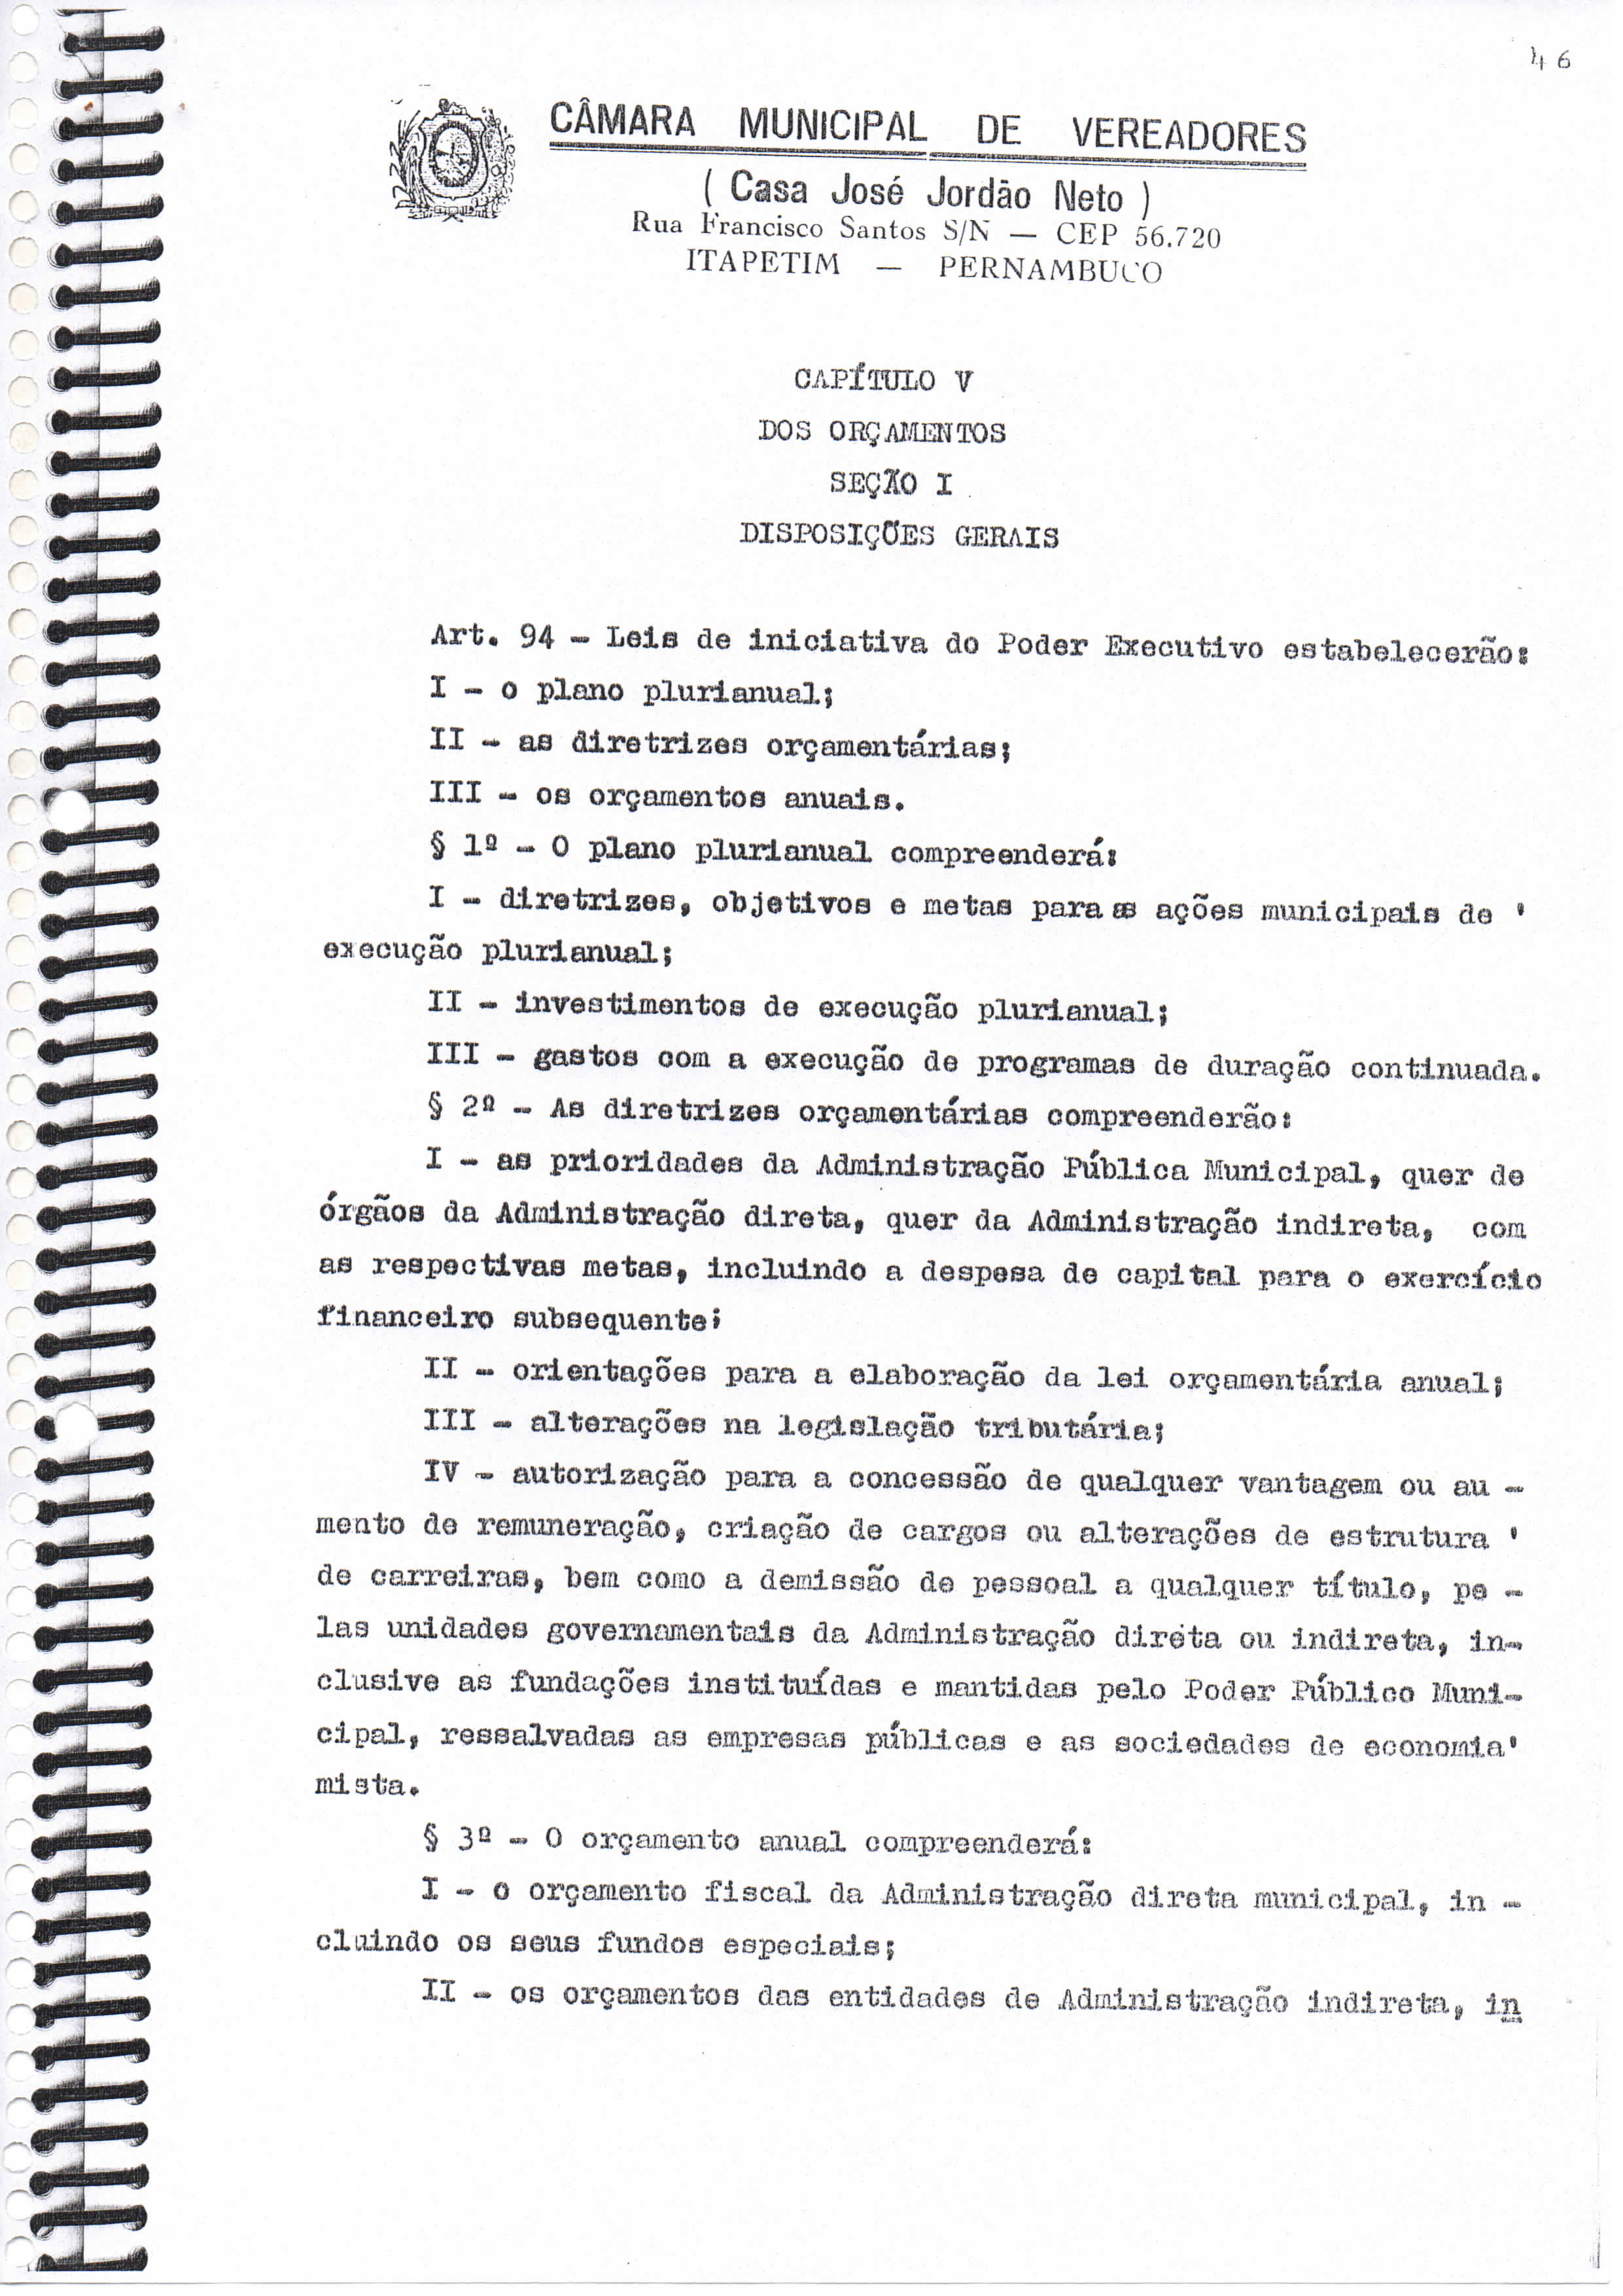 Lei Organica do Municipio_Página_54.jpg